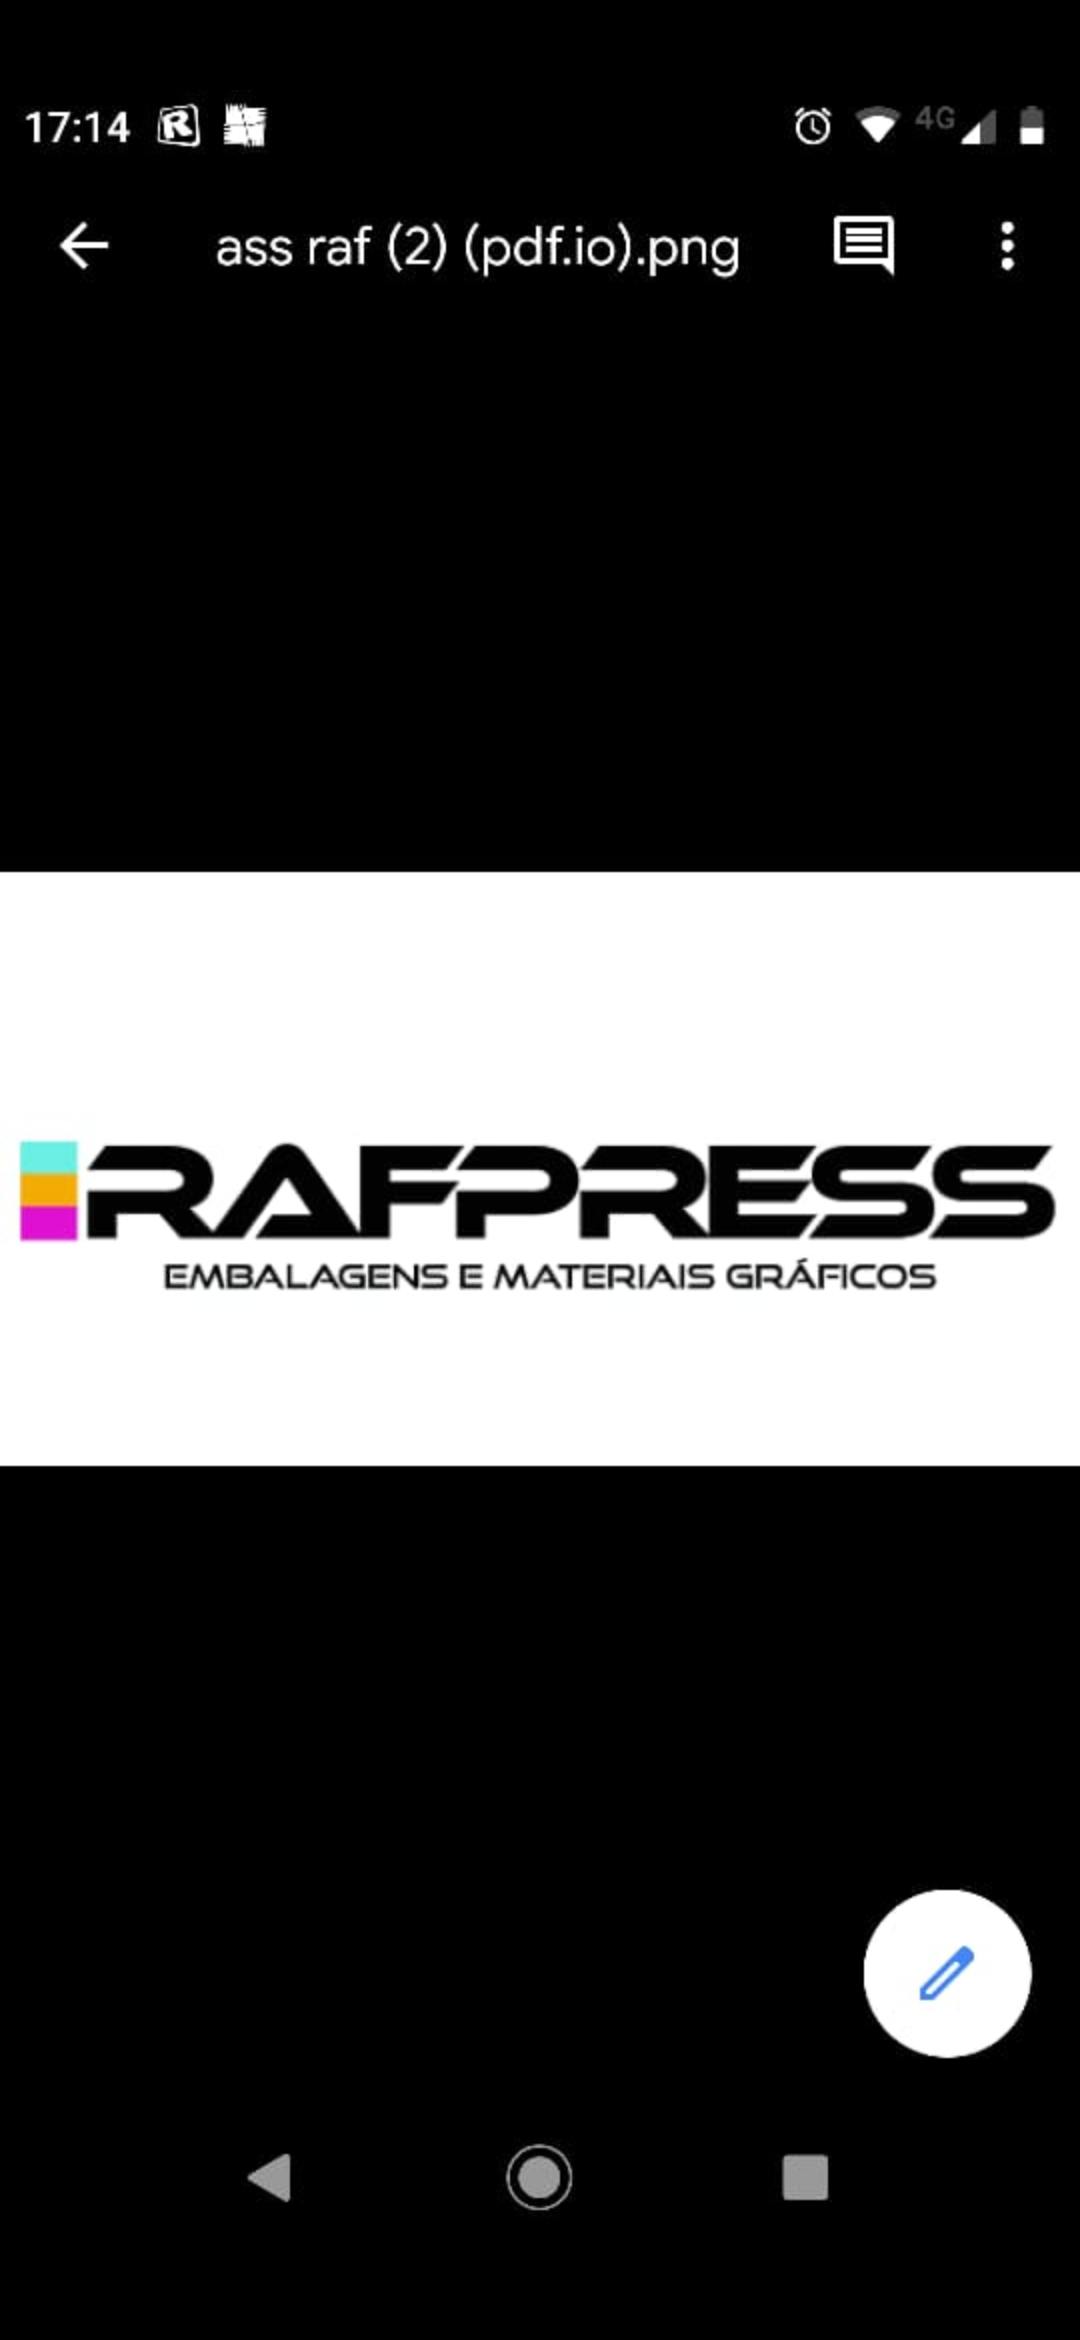 RafPress Apostilas